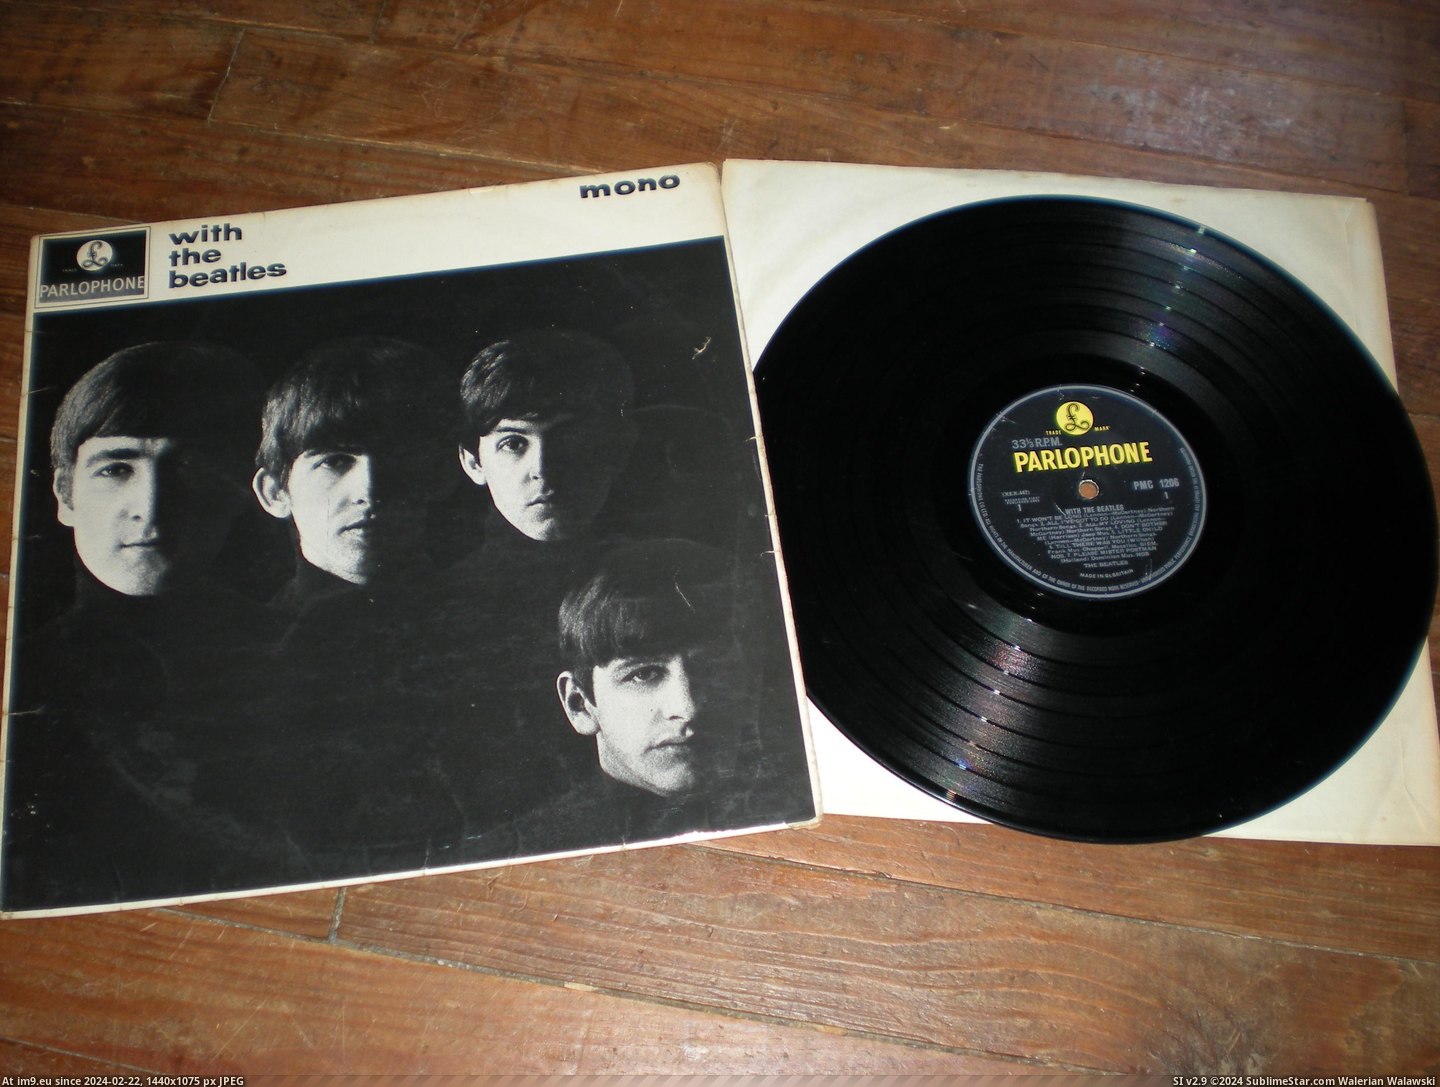  #Beatles  With The Beatles 7N 2 Pic. (Изображение из альбом new 1))